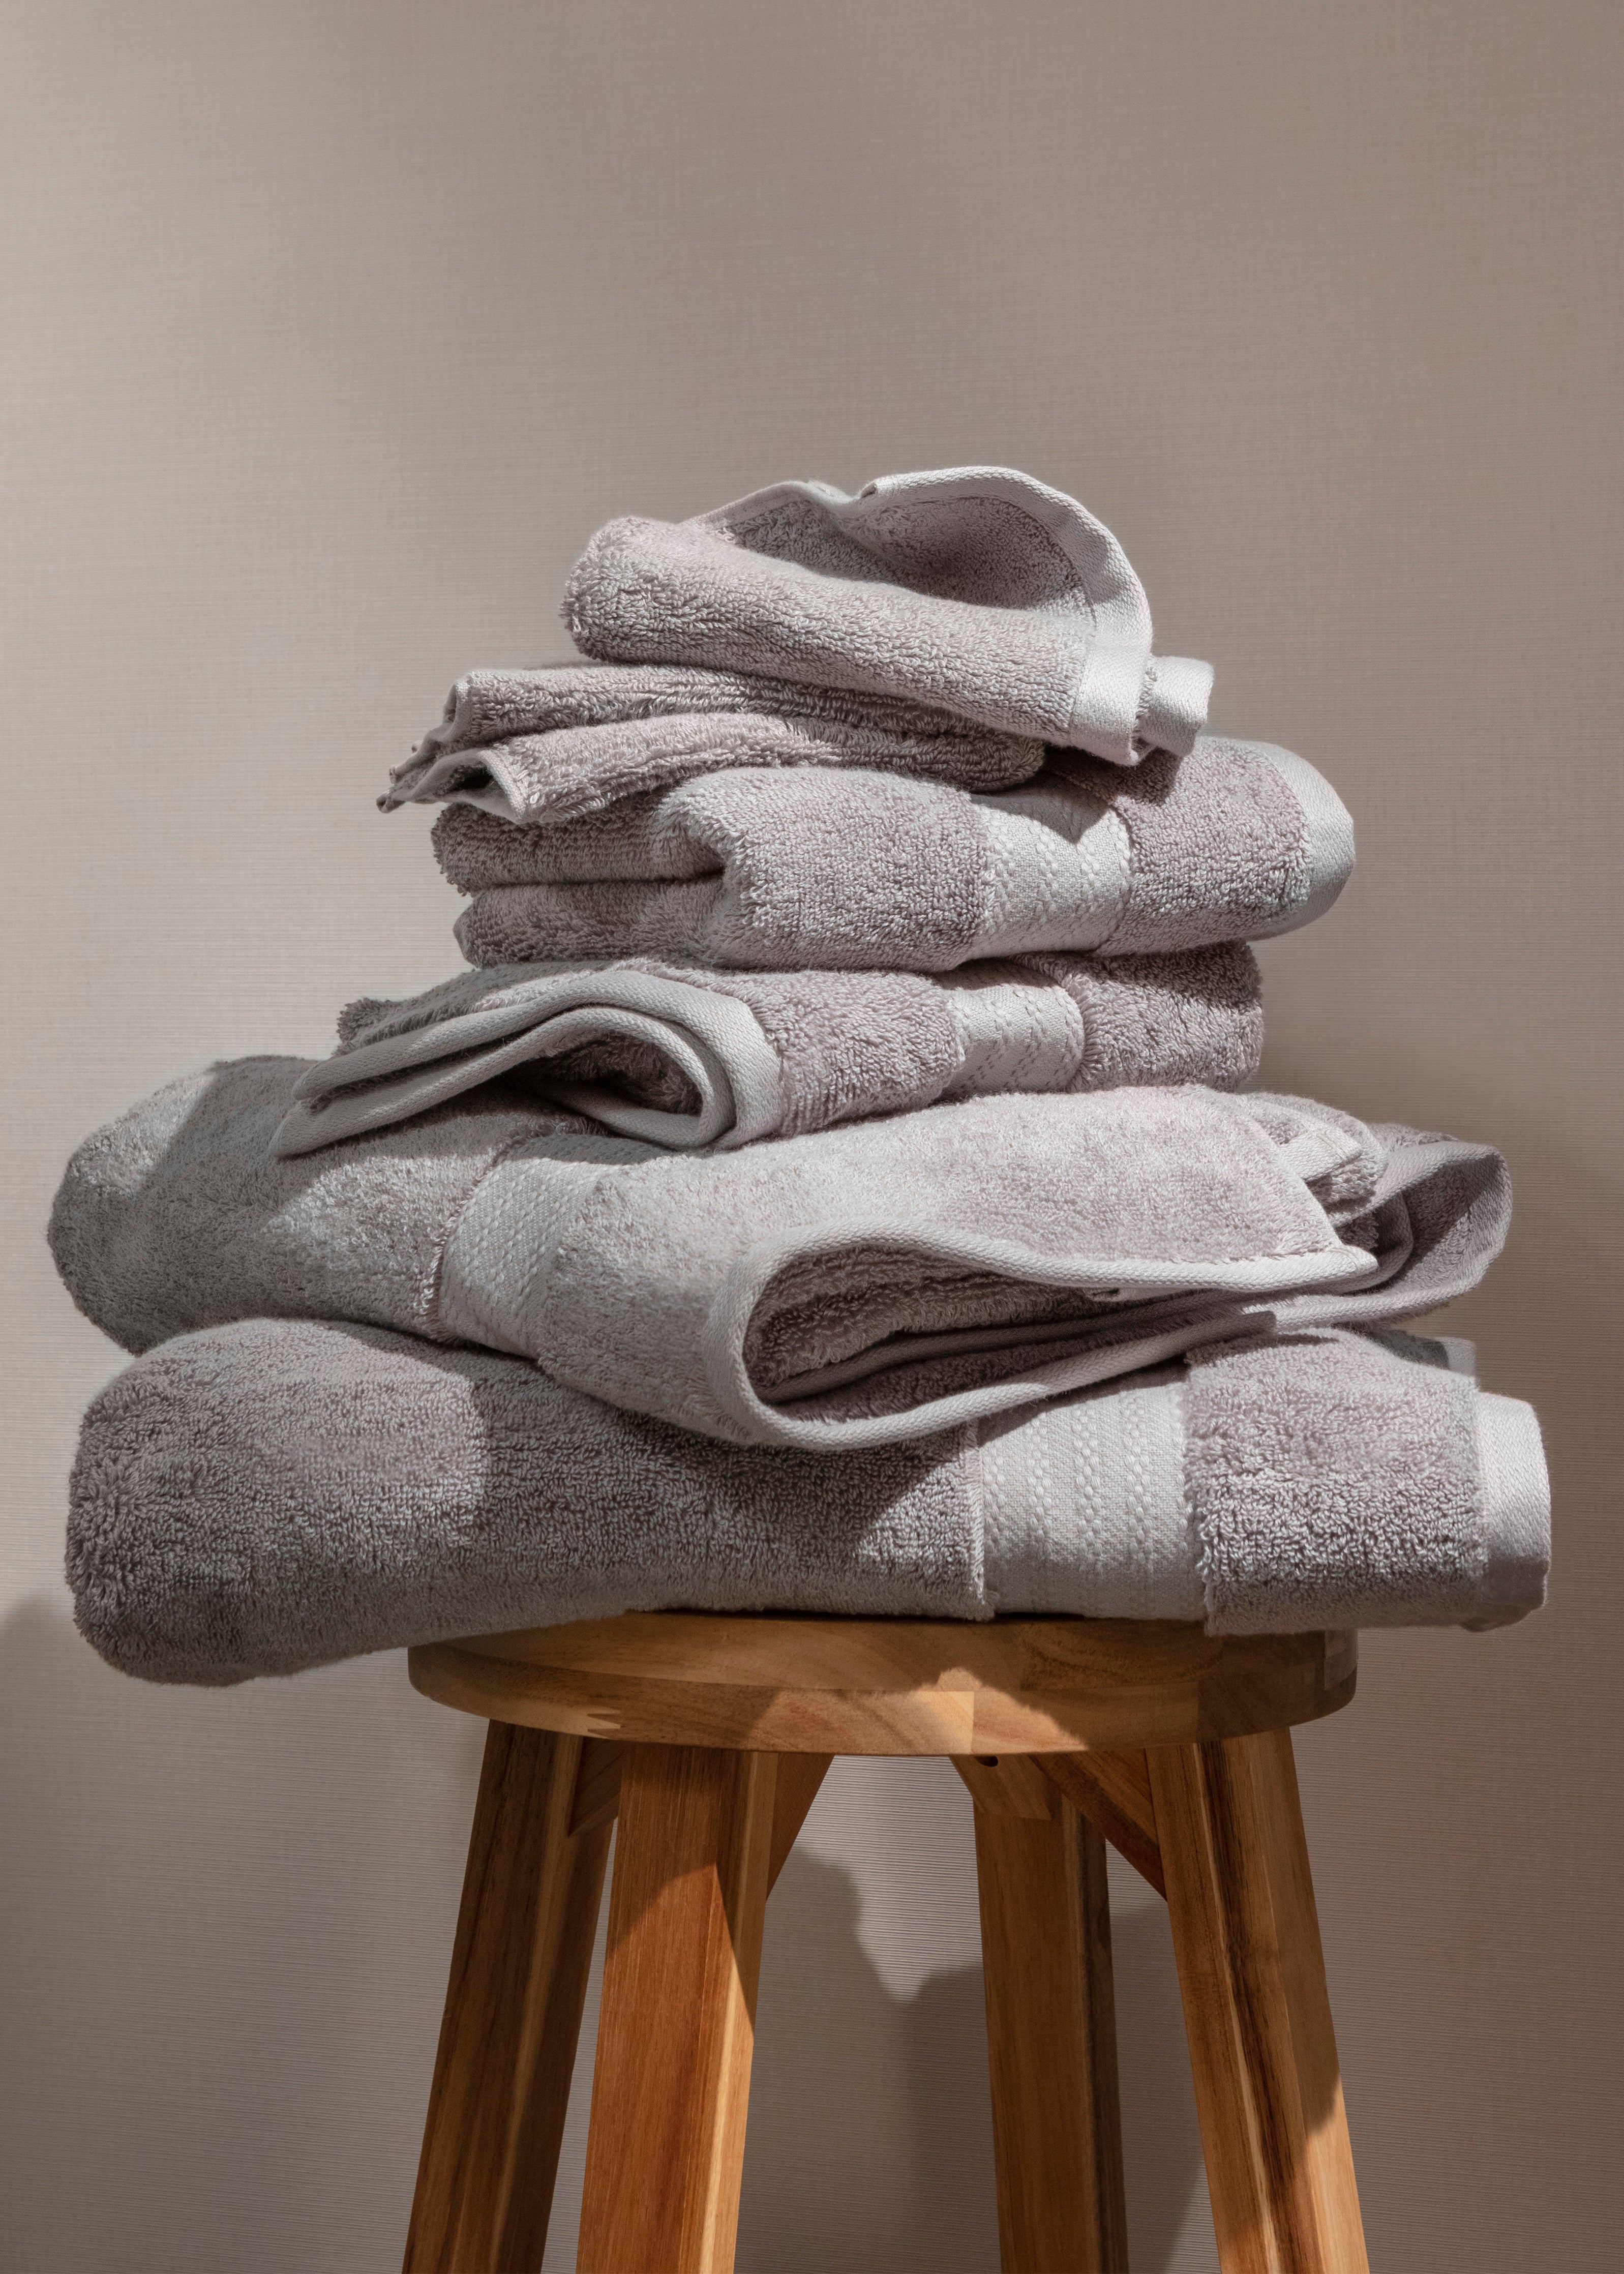 100% Organic Cotton Luxury Towels Set – Fabdreams Canada